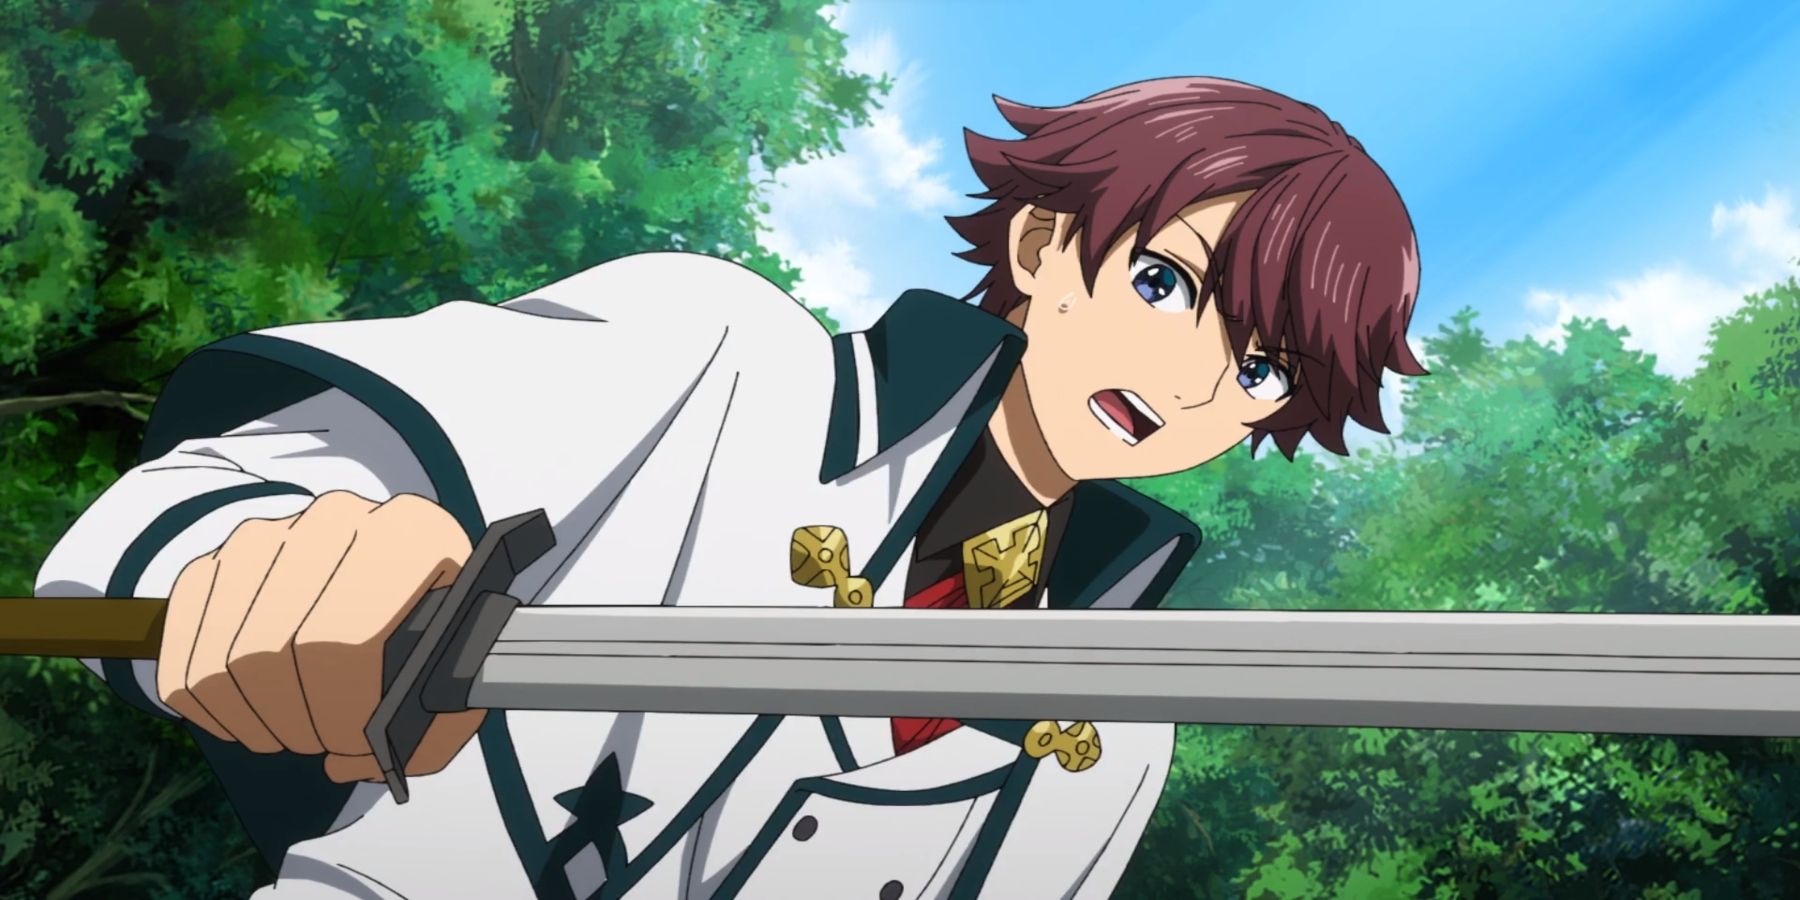 Kazuki Wielding His Sword